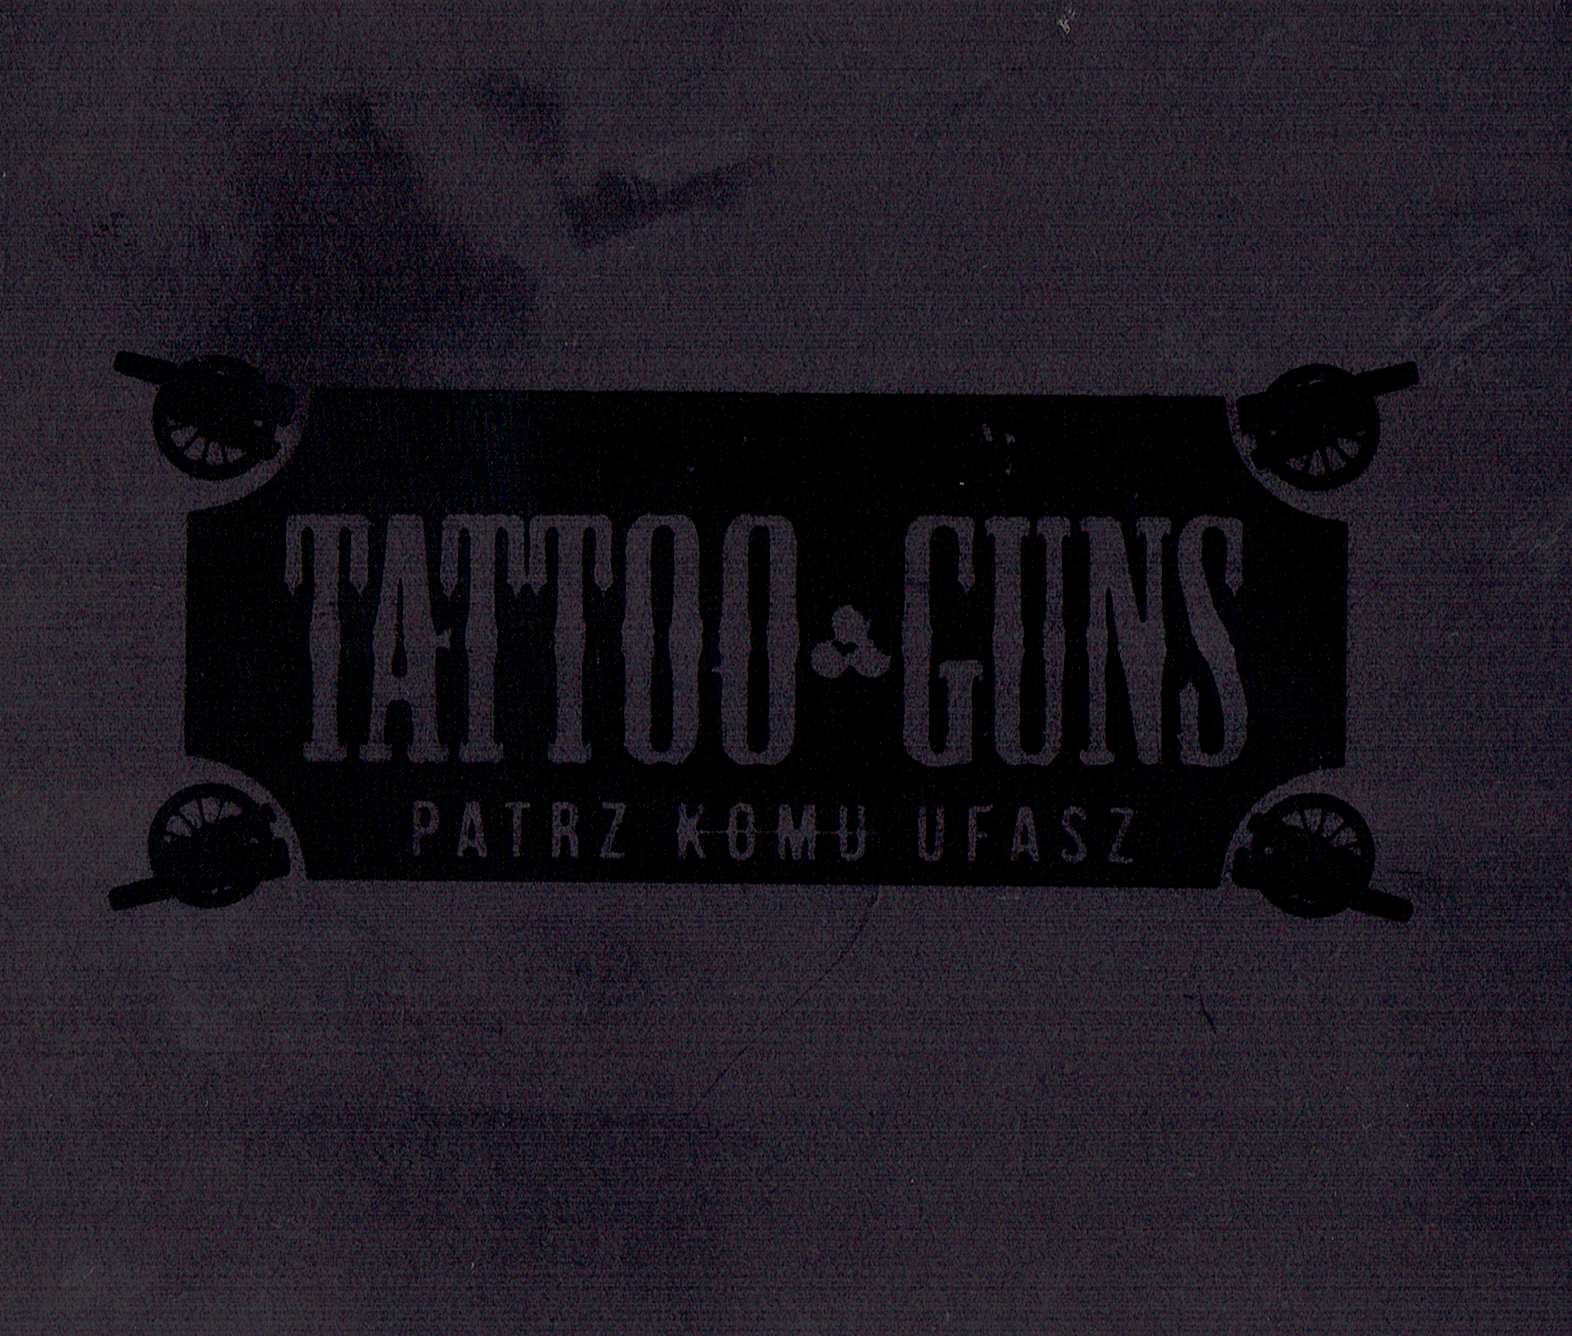 Tattoo Guns - Patrz Komu Ufasz (2016)